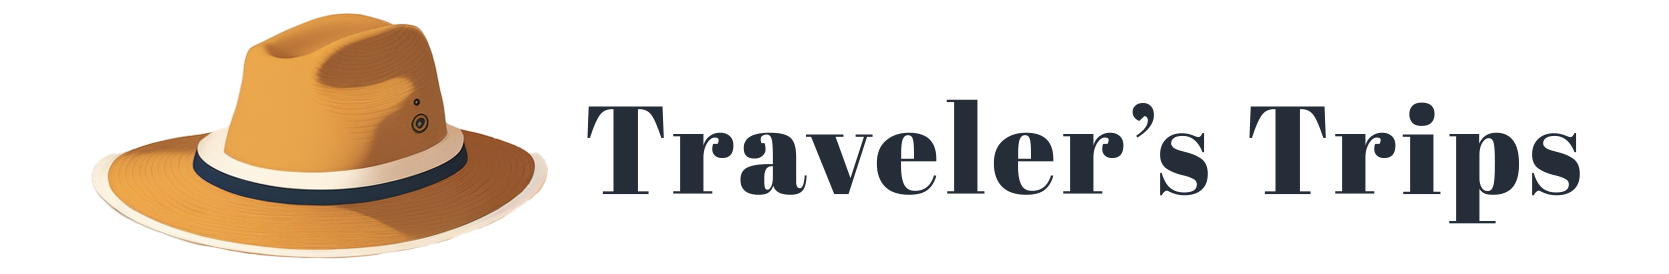 Traveler's Trips – Homepage